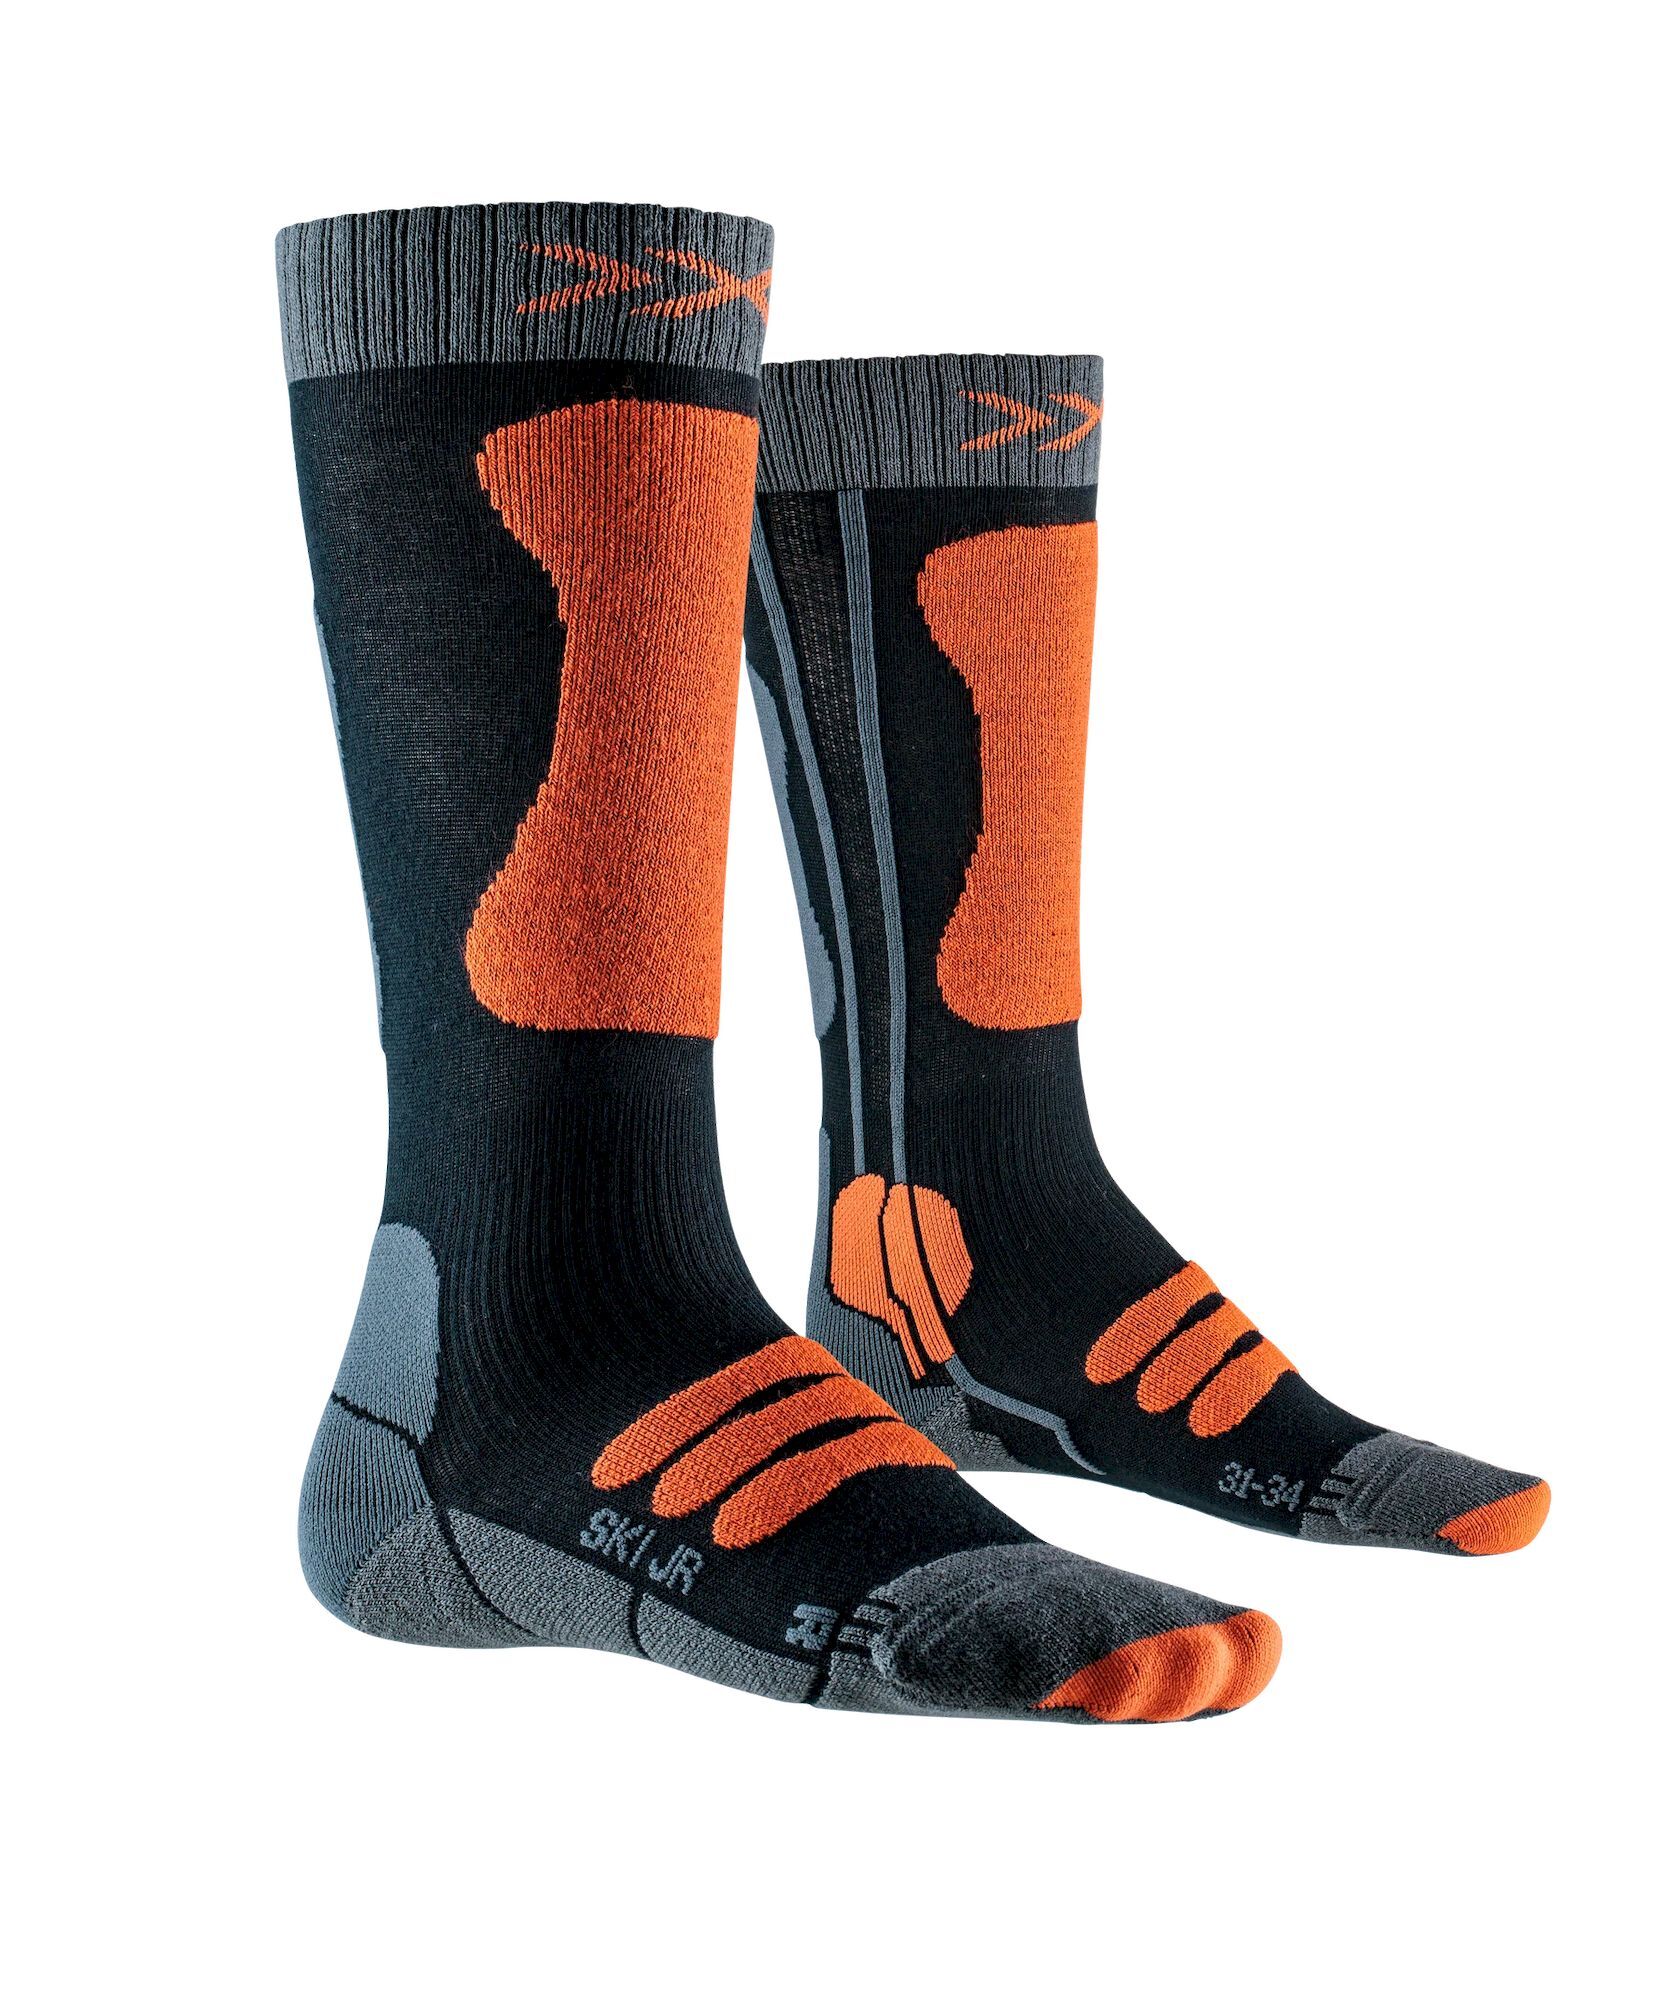 X-Socks Ski Junior 4.0 - Skisocken - Kind